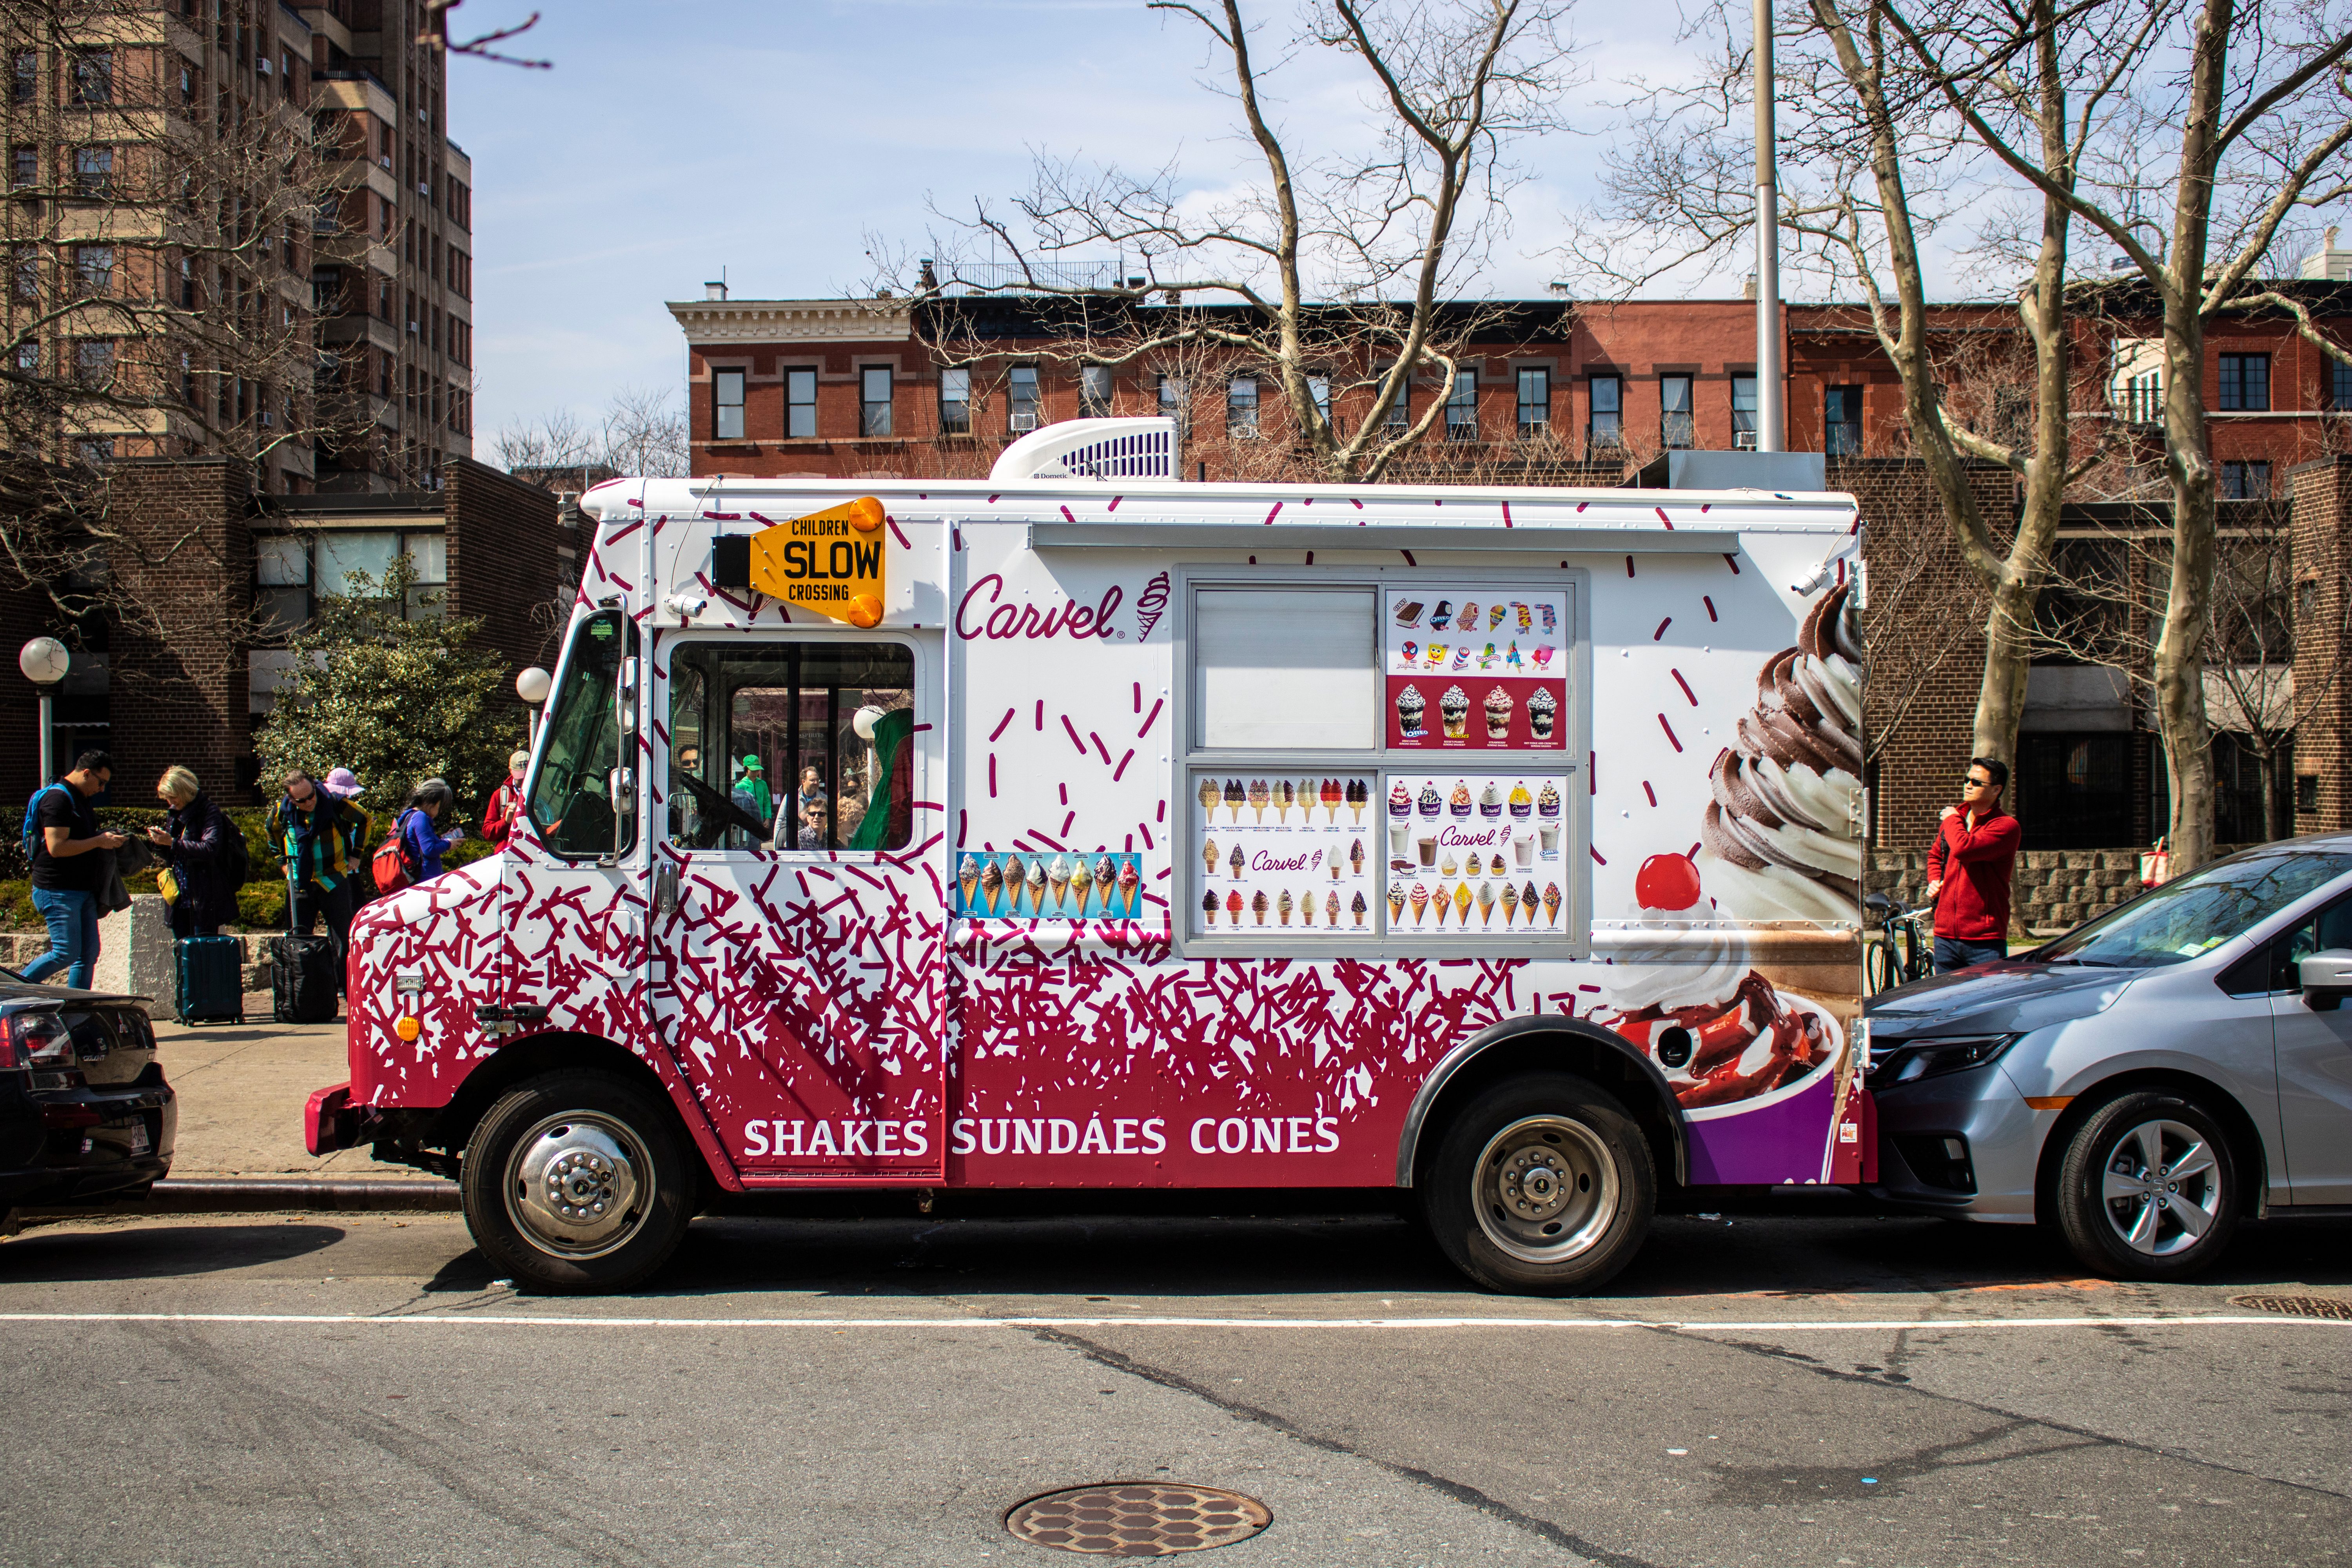 business for sale ice cream van